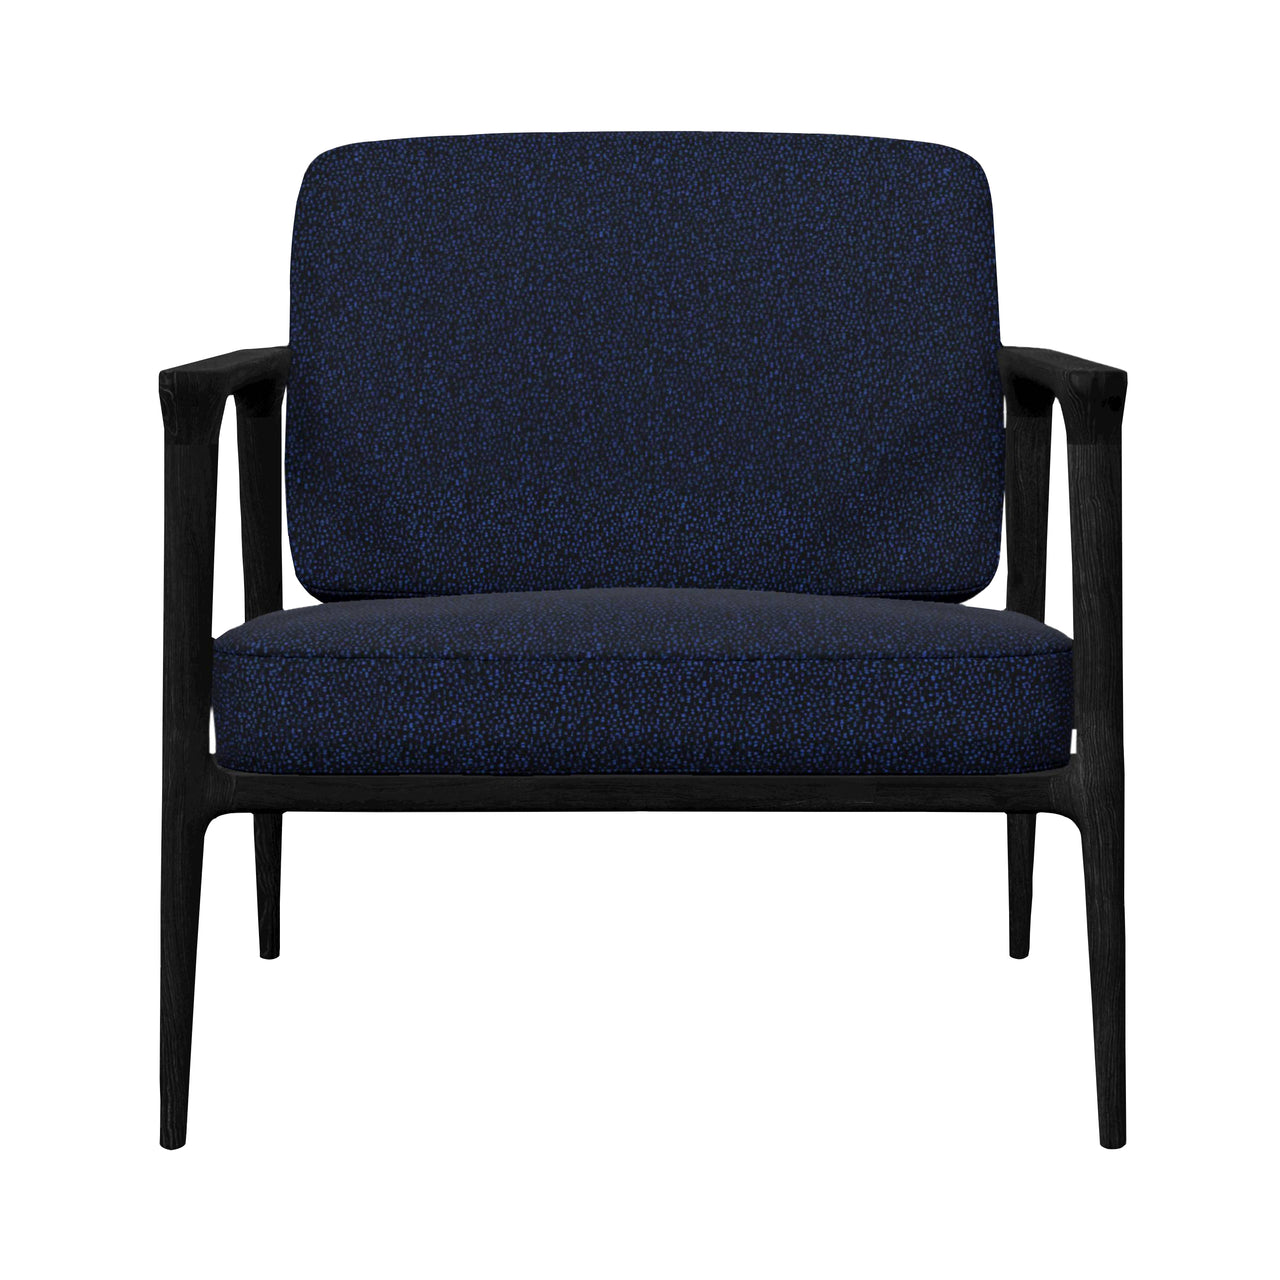 Zio Lounge Chair: Black